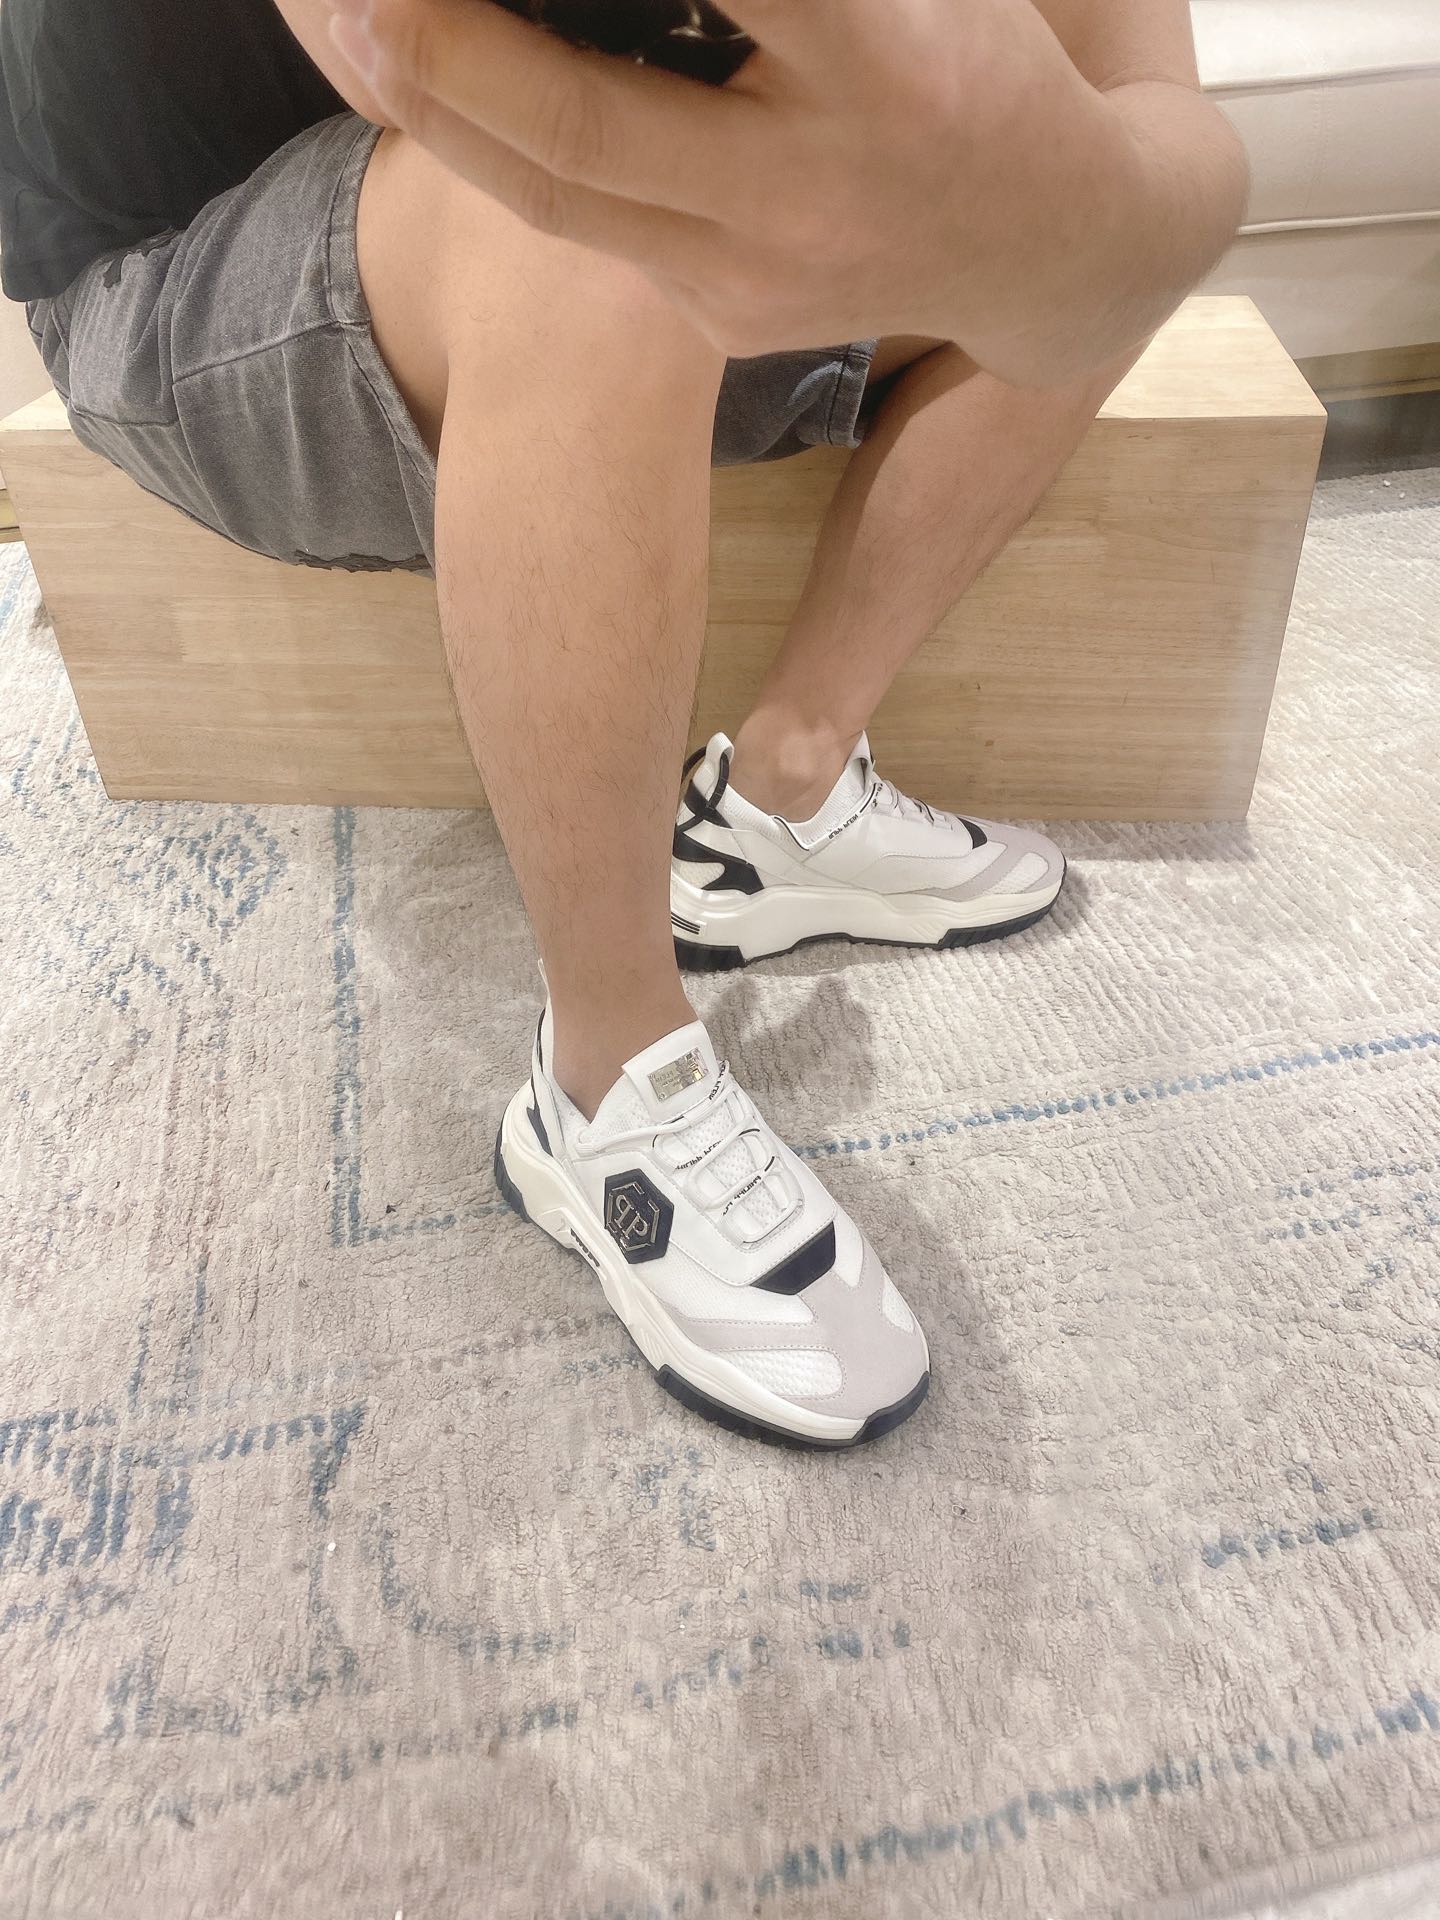 Philipp Plein #8852 hombres zapatos casuales de moda